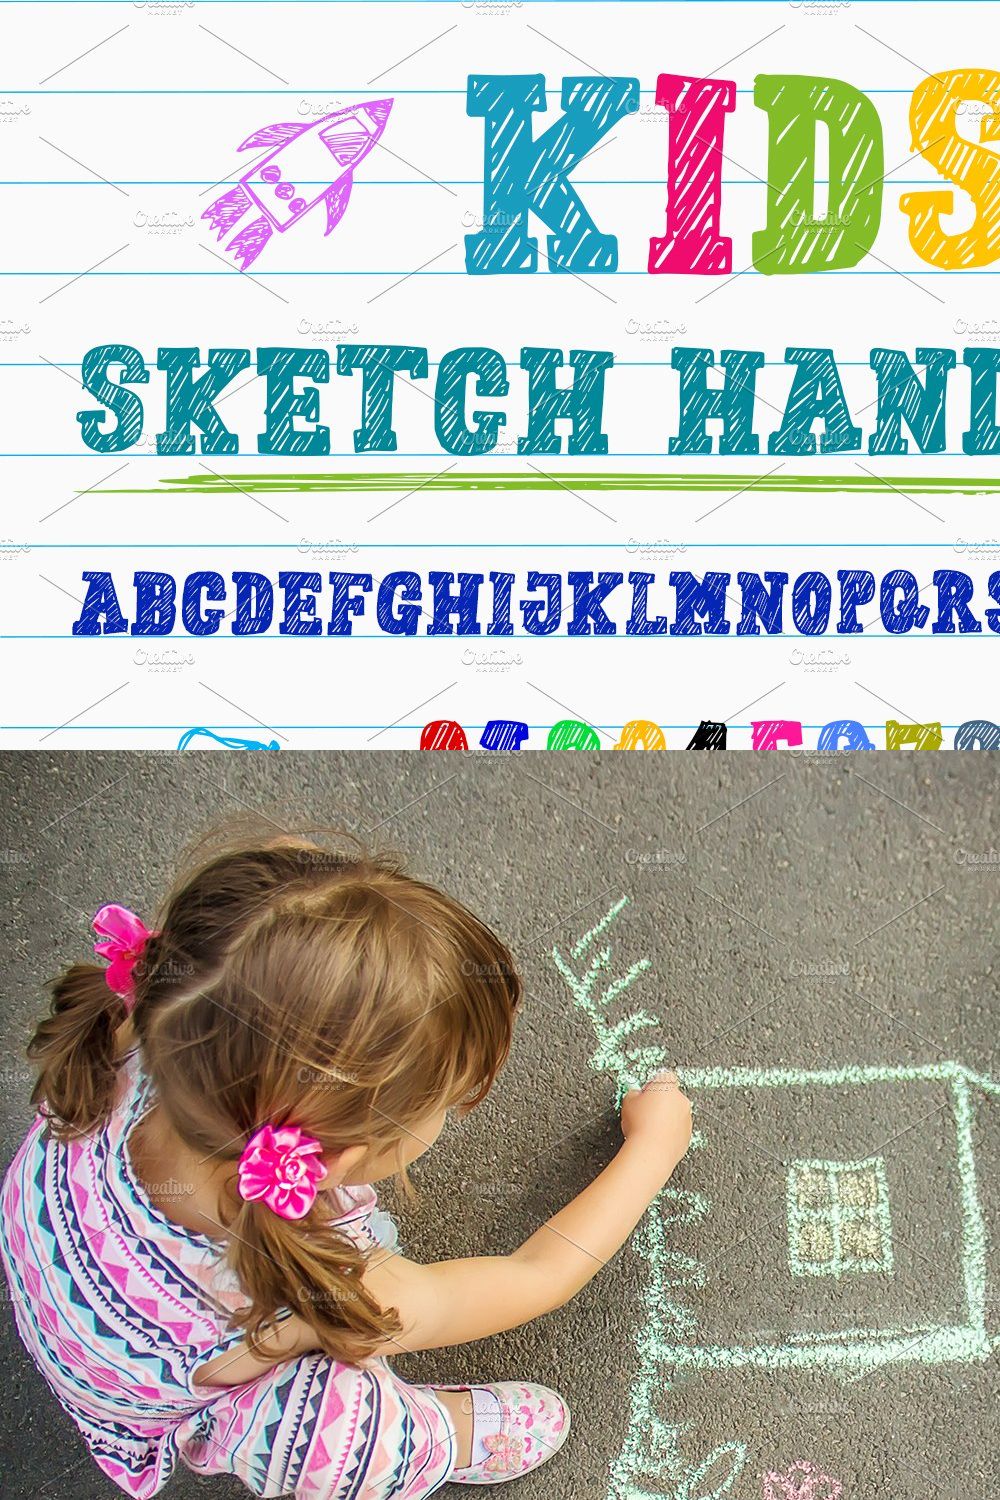 Kids Sketch Hand Font pinterest preview image.